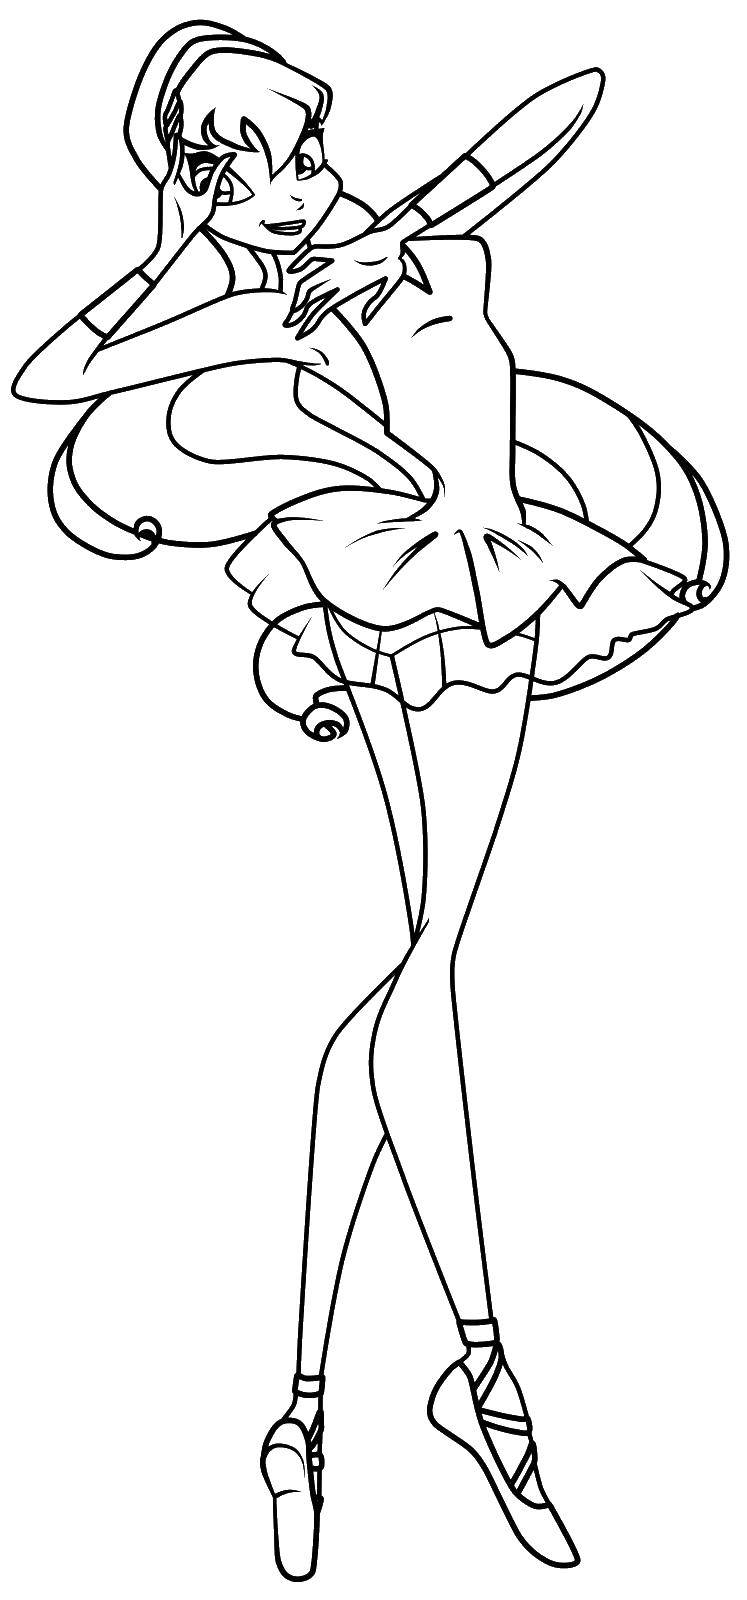 Coloring Stella from winx cartoon. Category ballerina. Tags:  Ballerina, ballet.